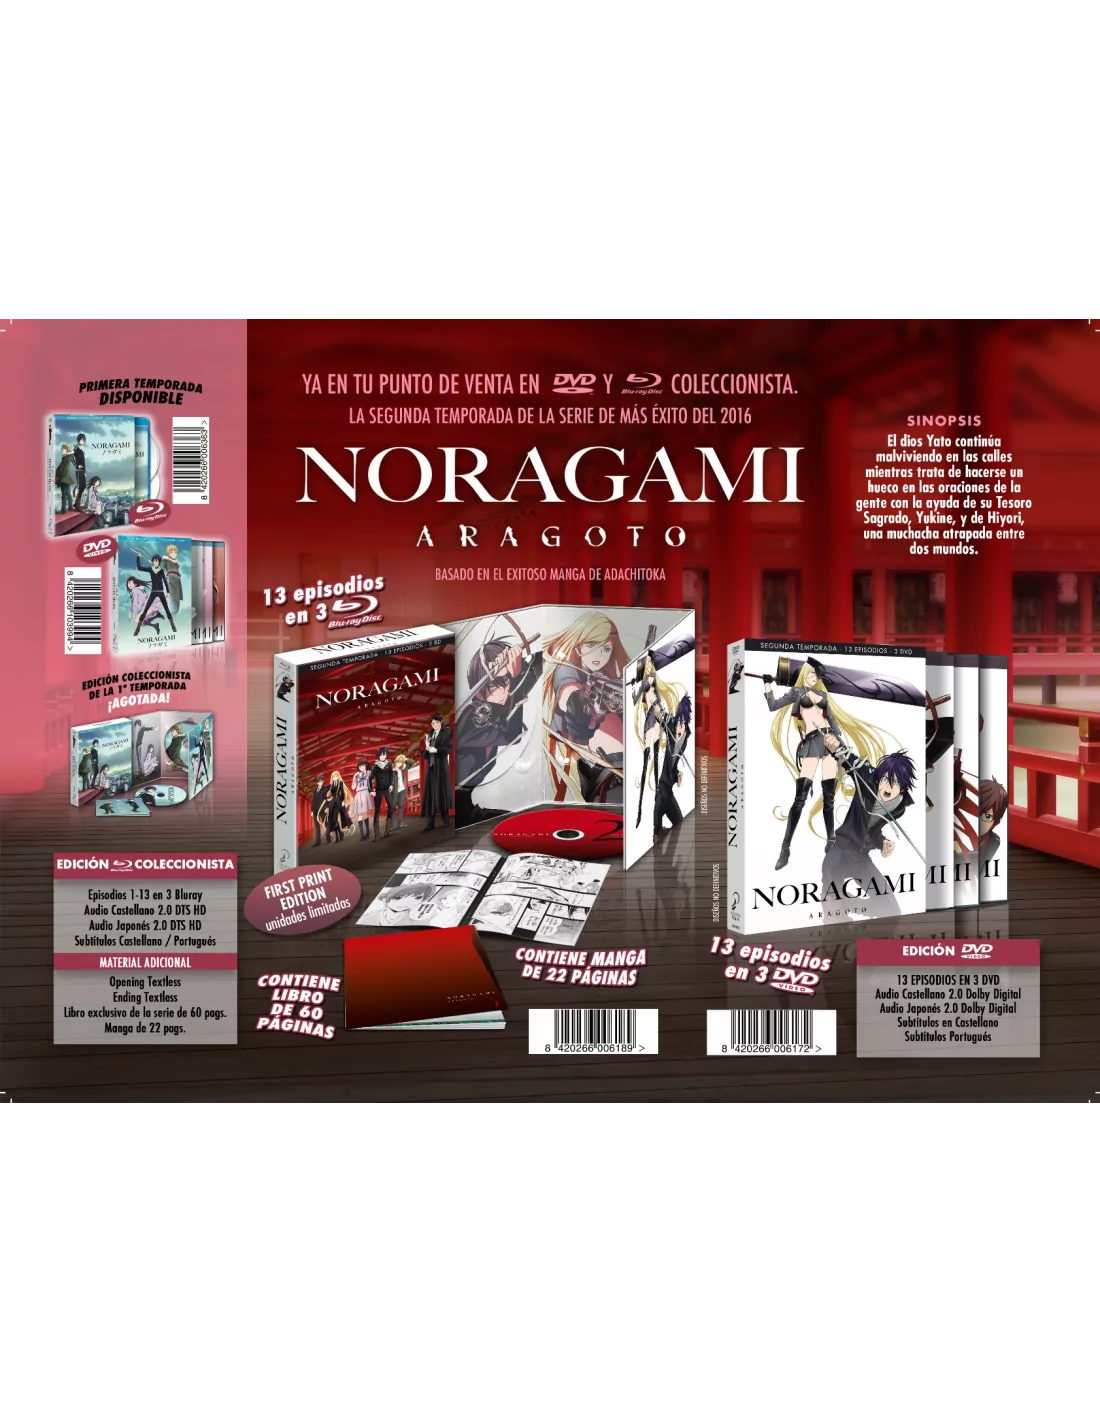 Noragami Aragoto - Season 2 - Blu-ray + DVD